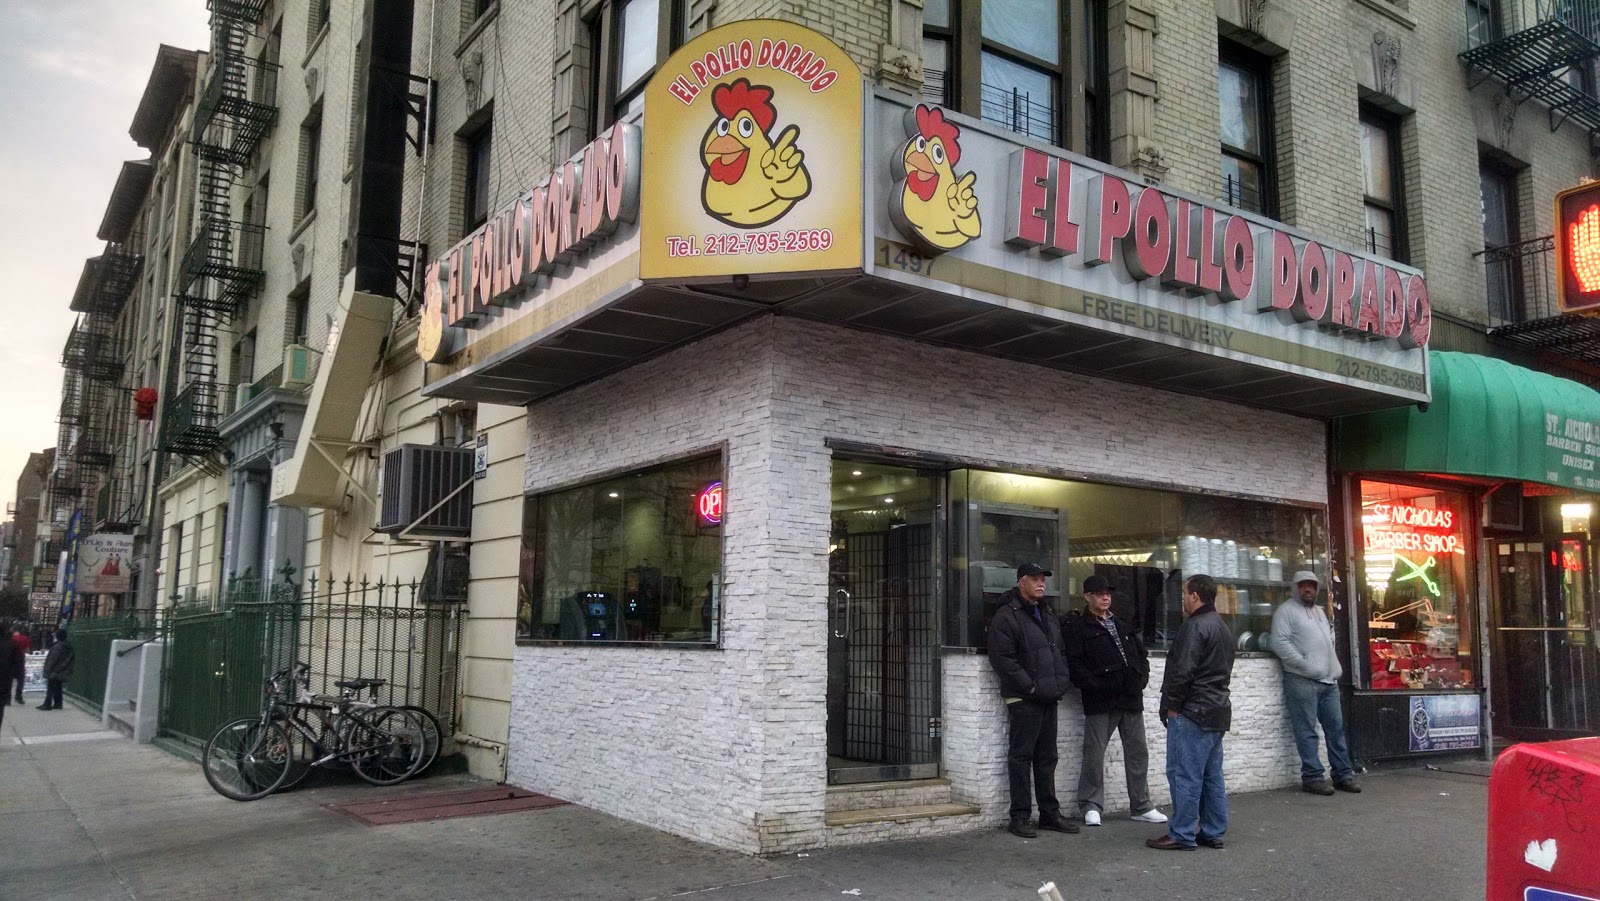 Photo of El Pollo Dorado in New York City, New York, United States - 1 Picture of Restaurant, Food, Point of interest, Establishment